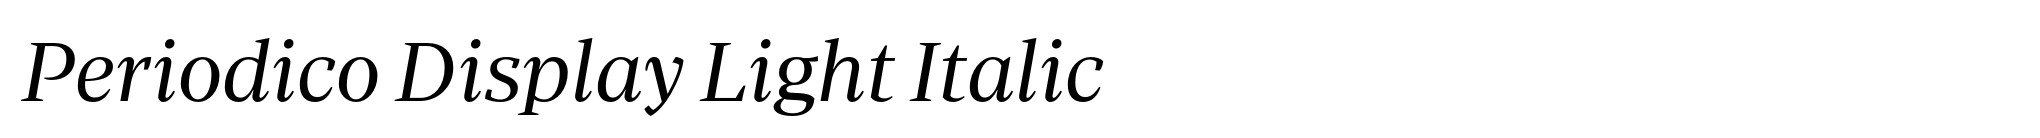 Periodico Display Light Italic image